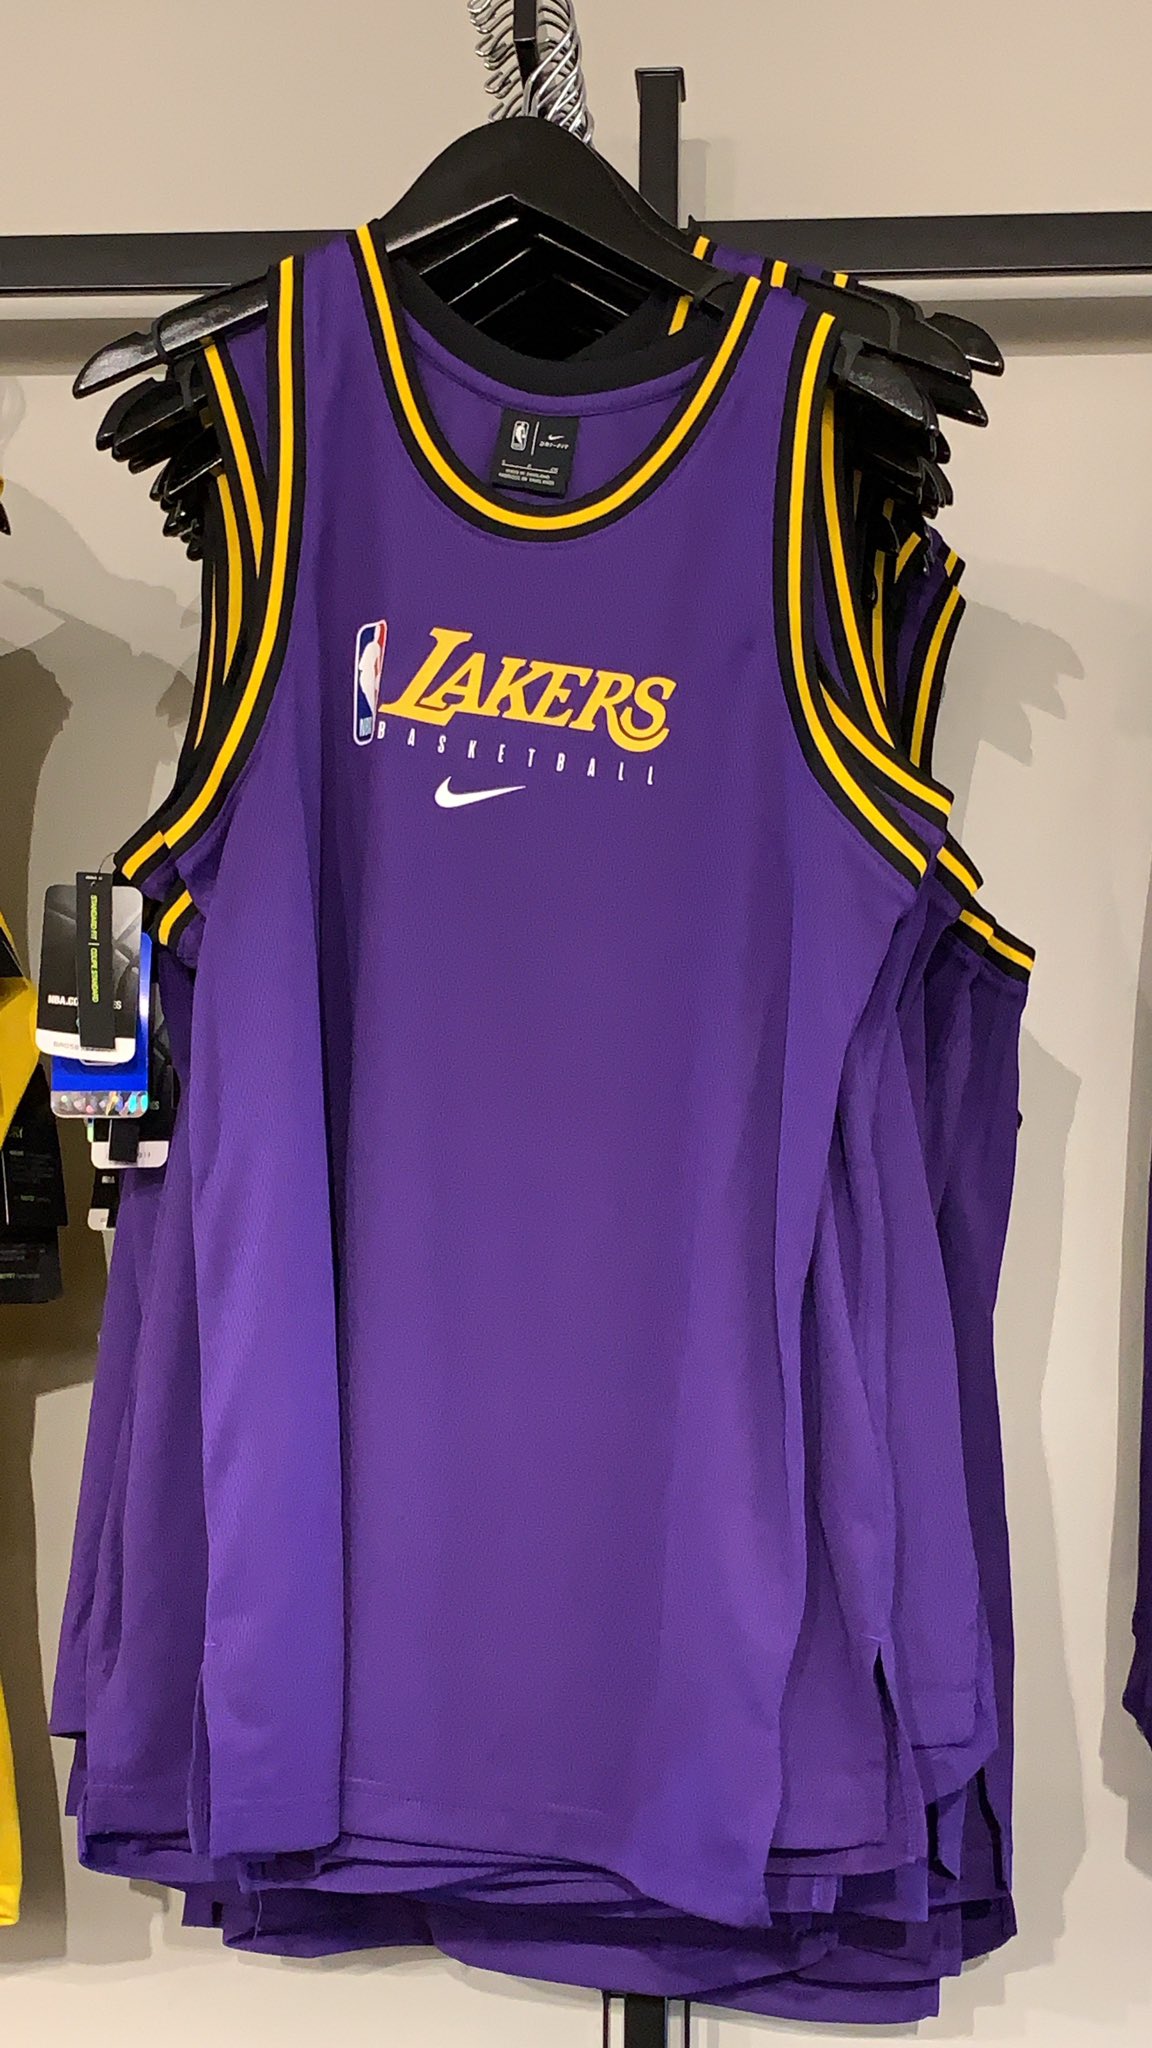 Lakers Store, El Segundo CA